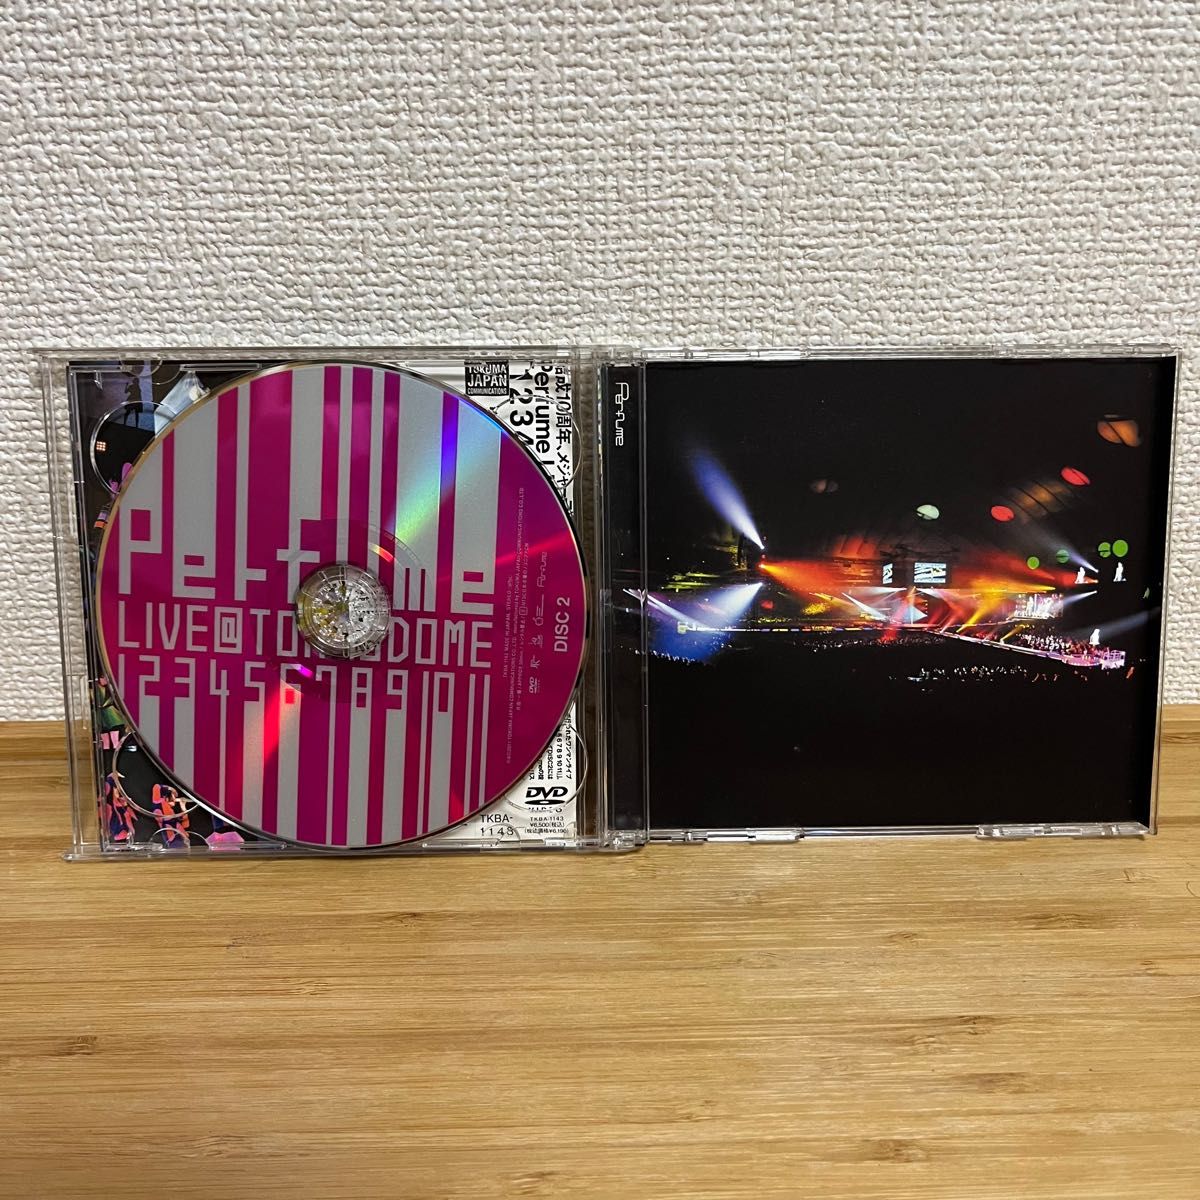 Perfume LIVE DVD 東京ドーム ２枚組 結成10周年「1 2 3 4 5 6 7 8 9 10 11」パフューム